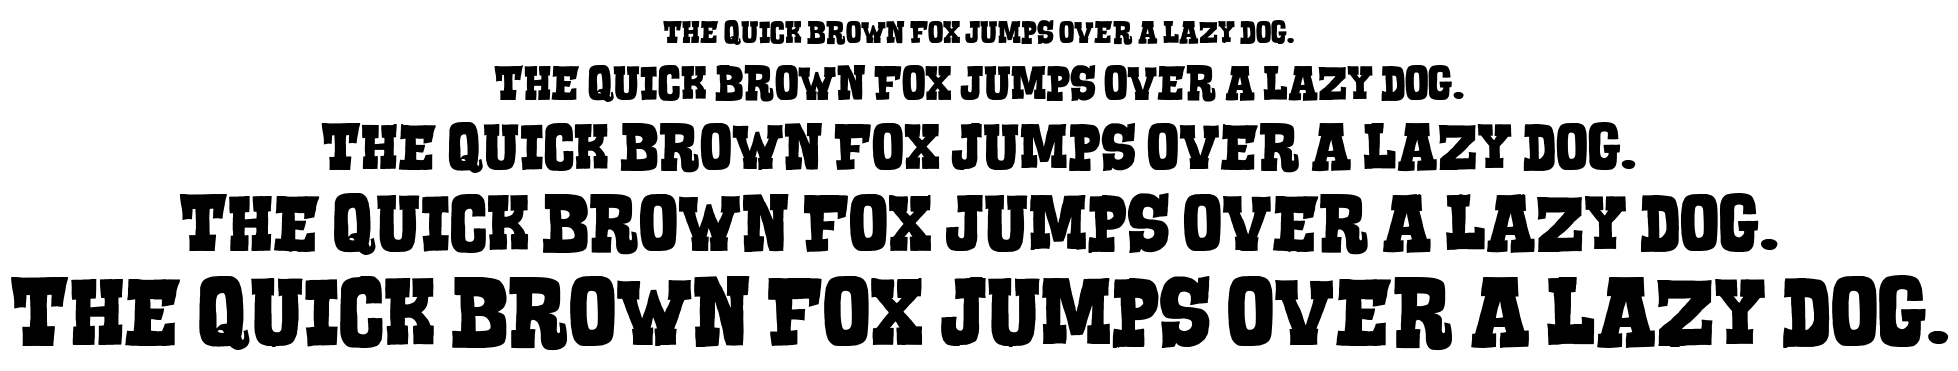 Serif of nottingham font